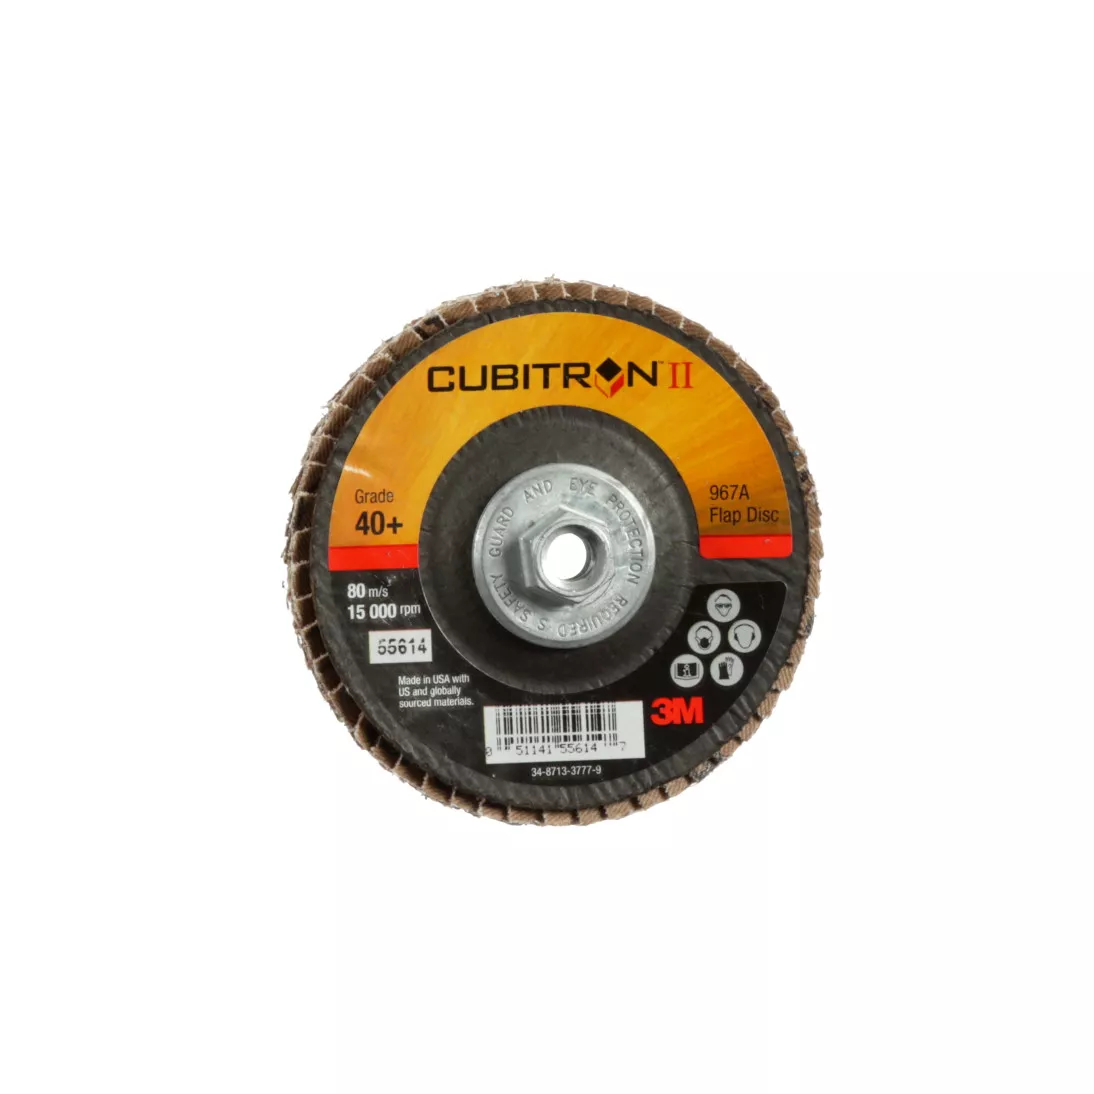 3M™ Cubitron™ II Flap Disc 967A, 40+, T29 Quick Change, 4 in x 3/8